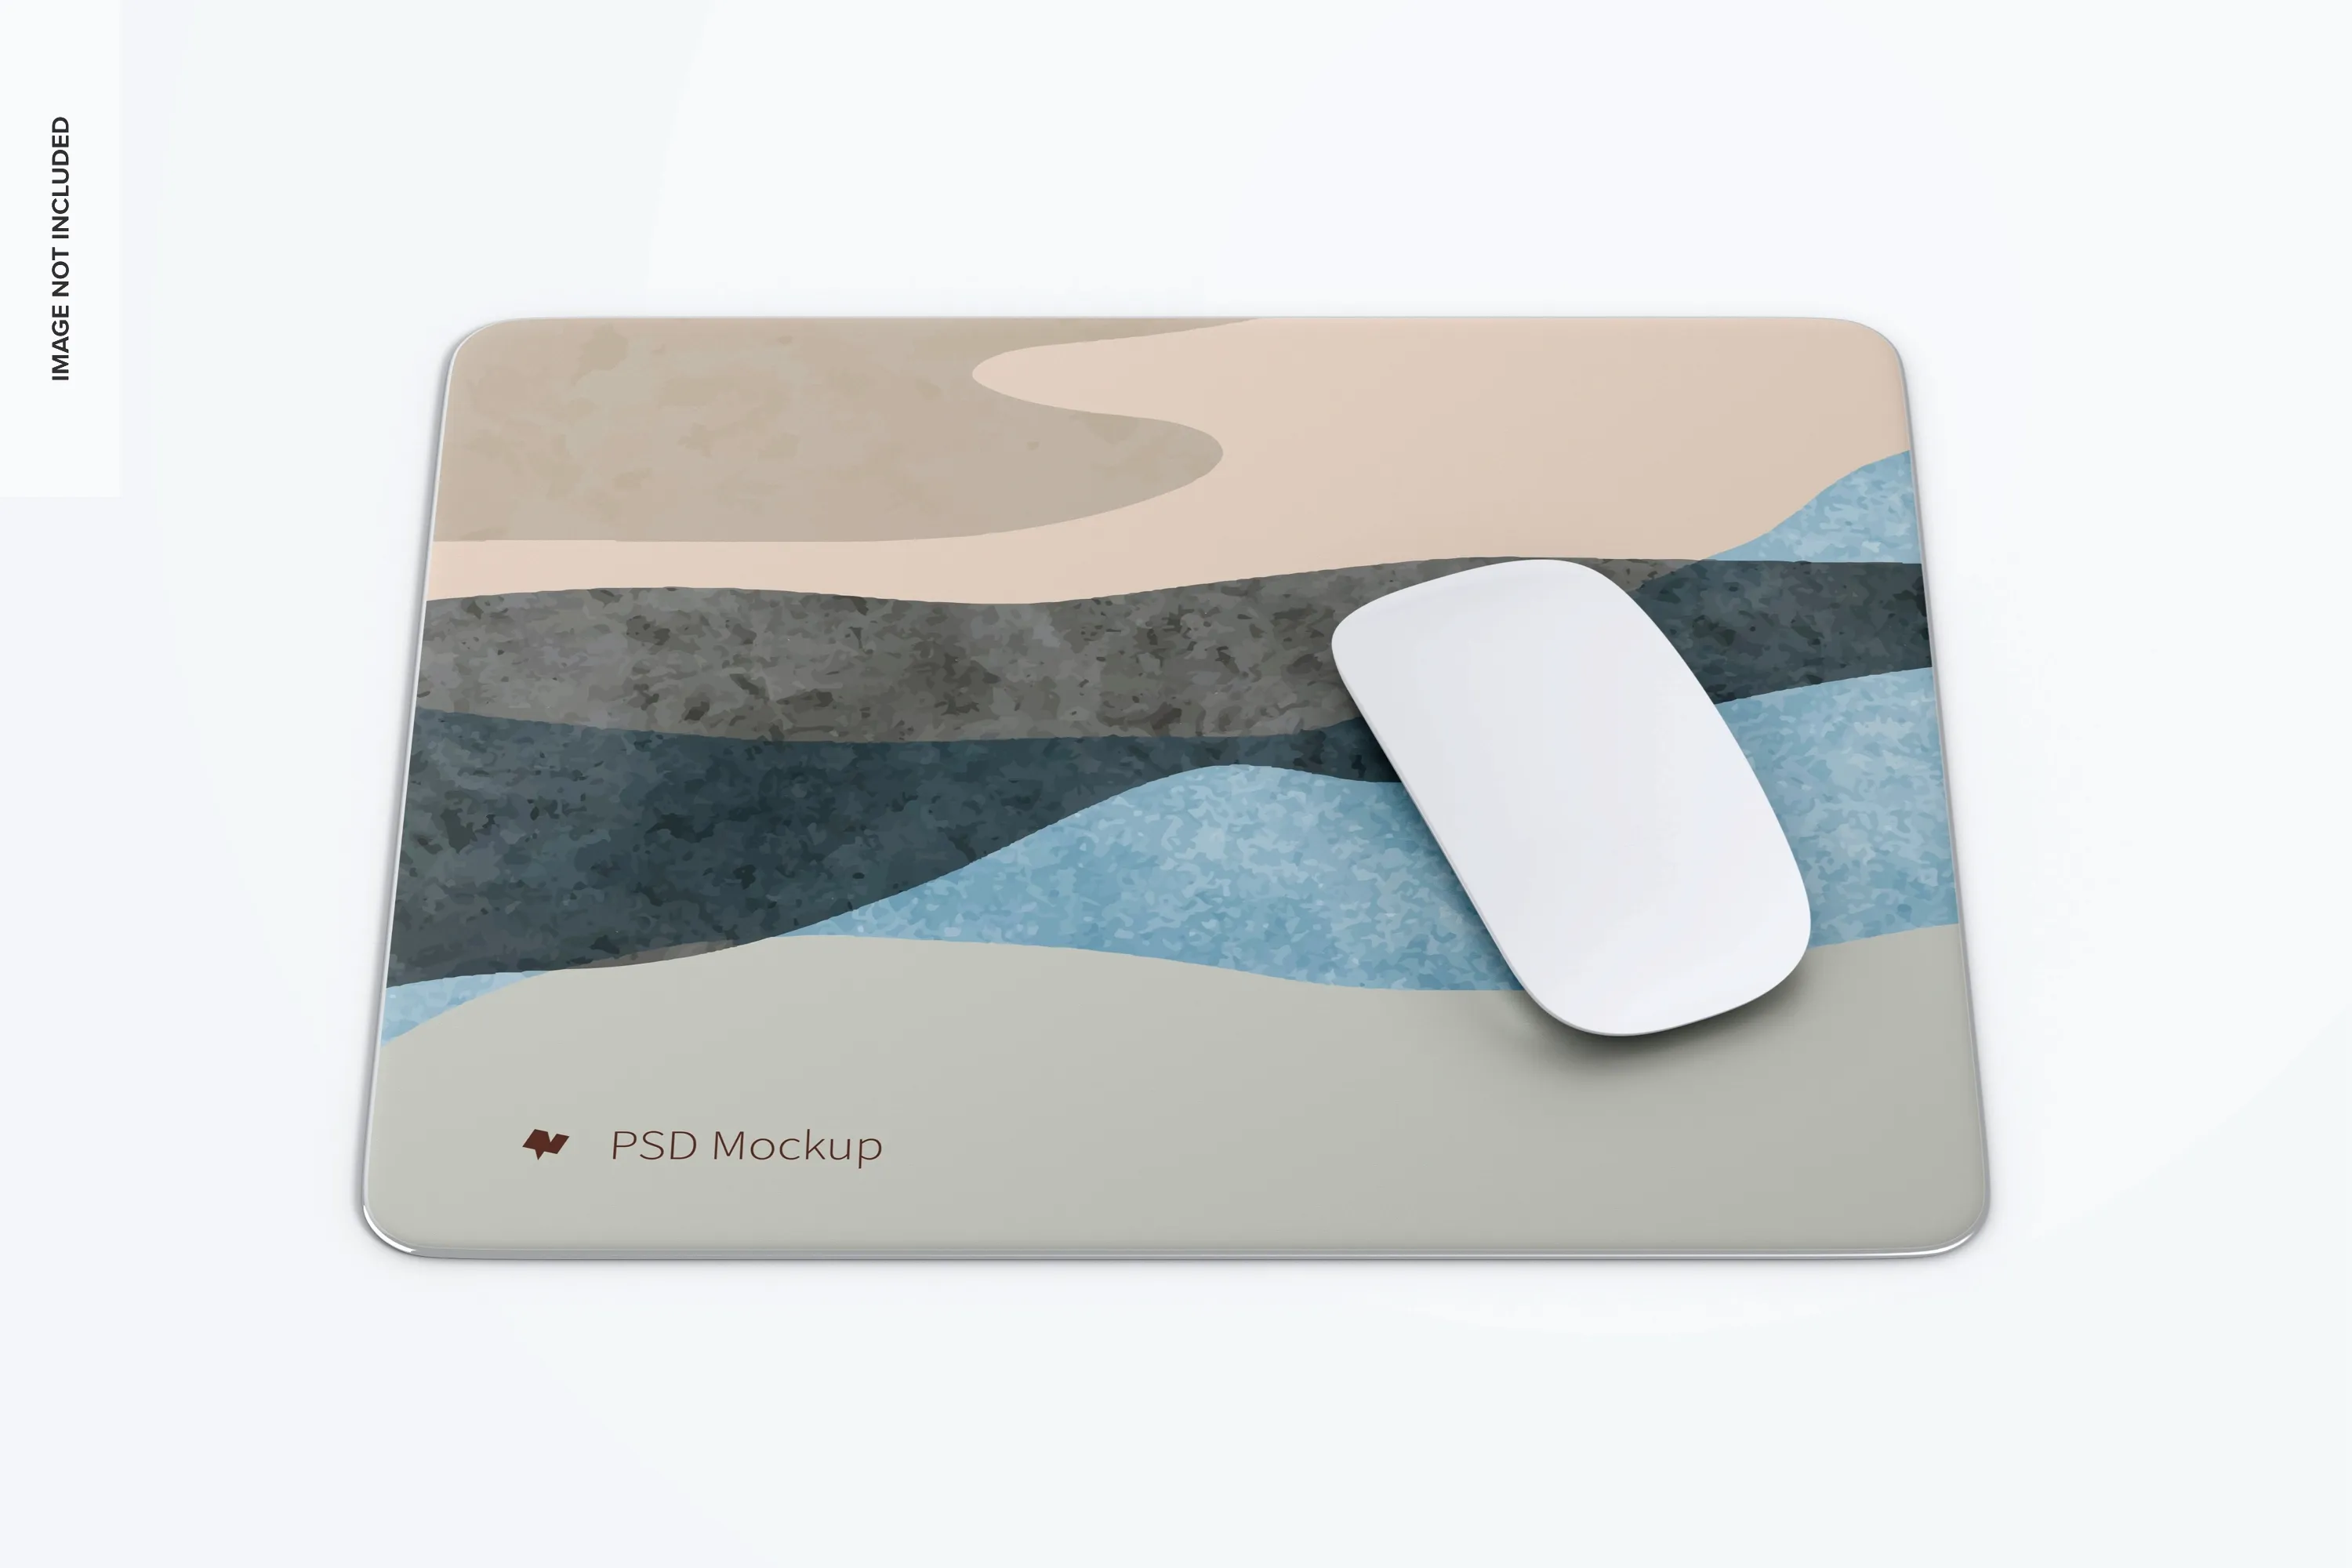 Rectangular aluminum mouse pad mockup, front view